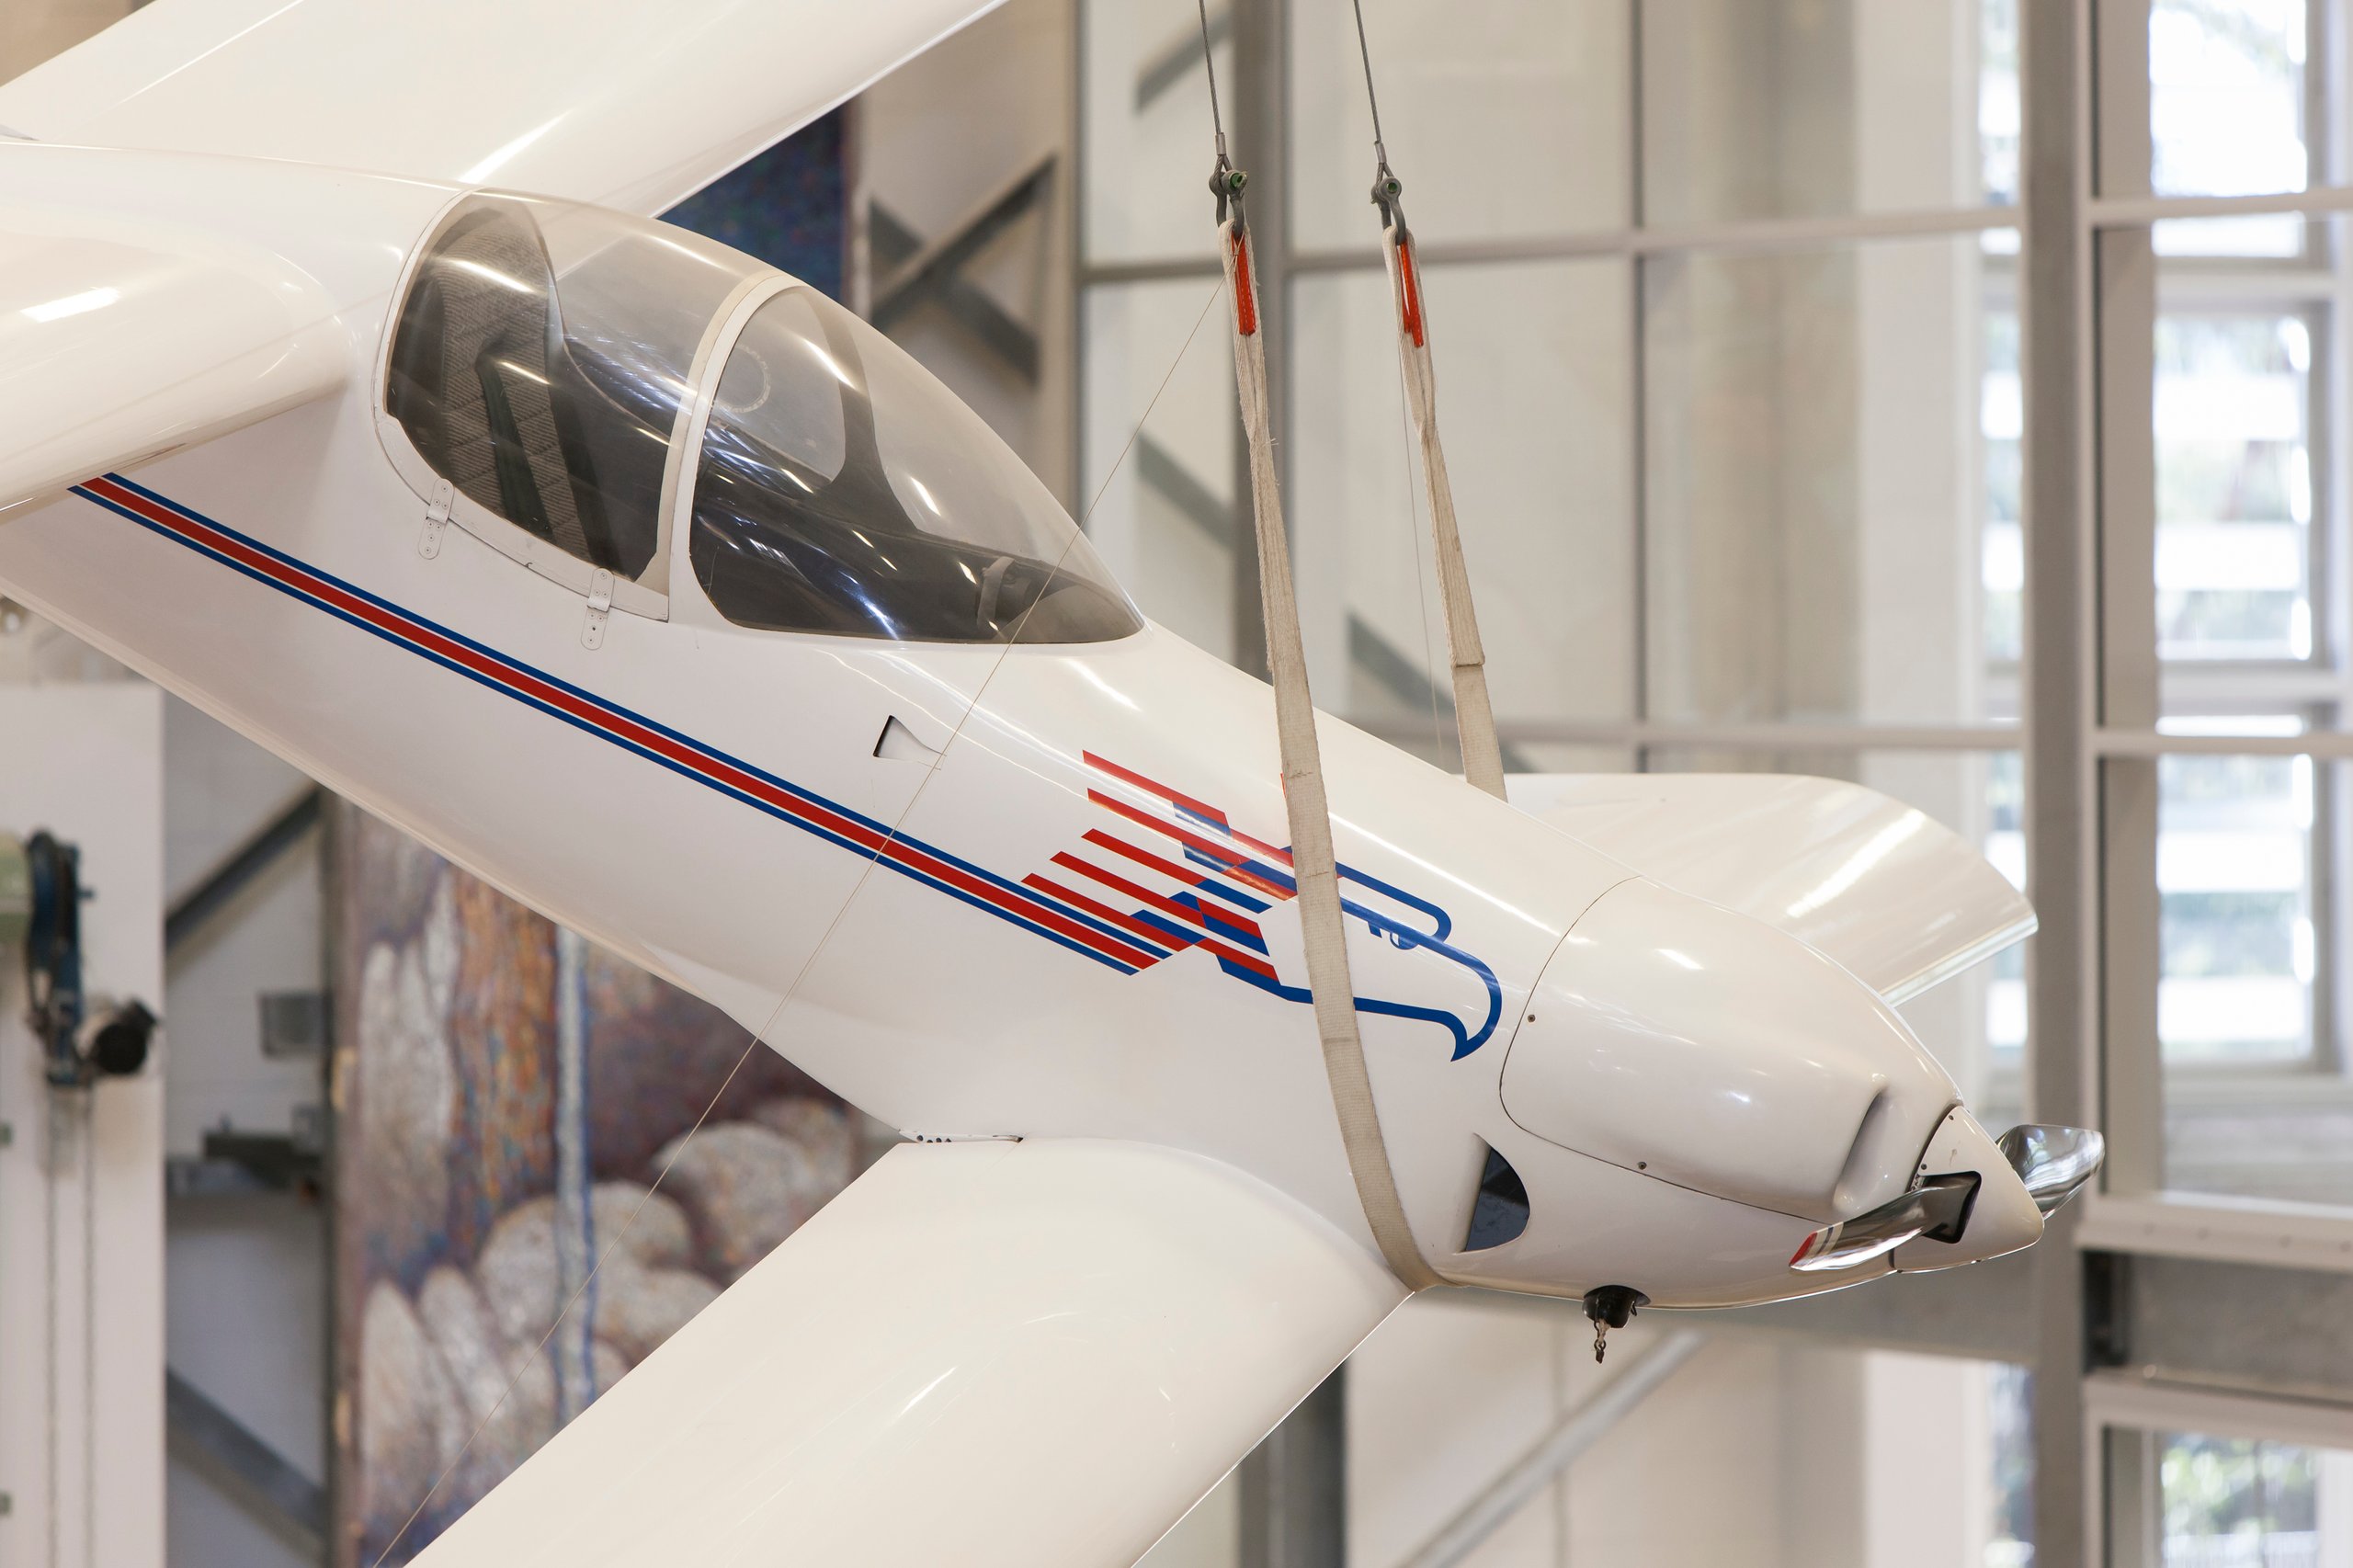 Eagle-X aircraft prototype